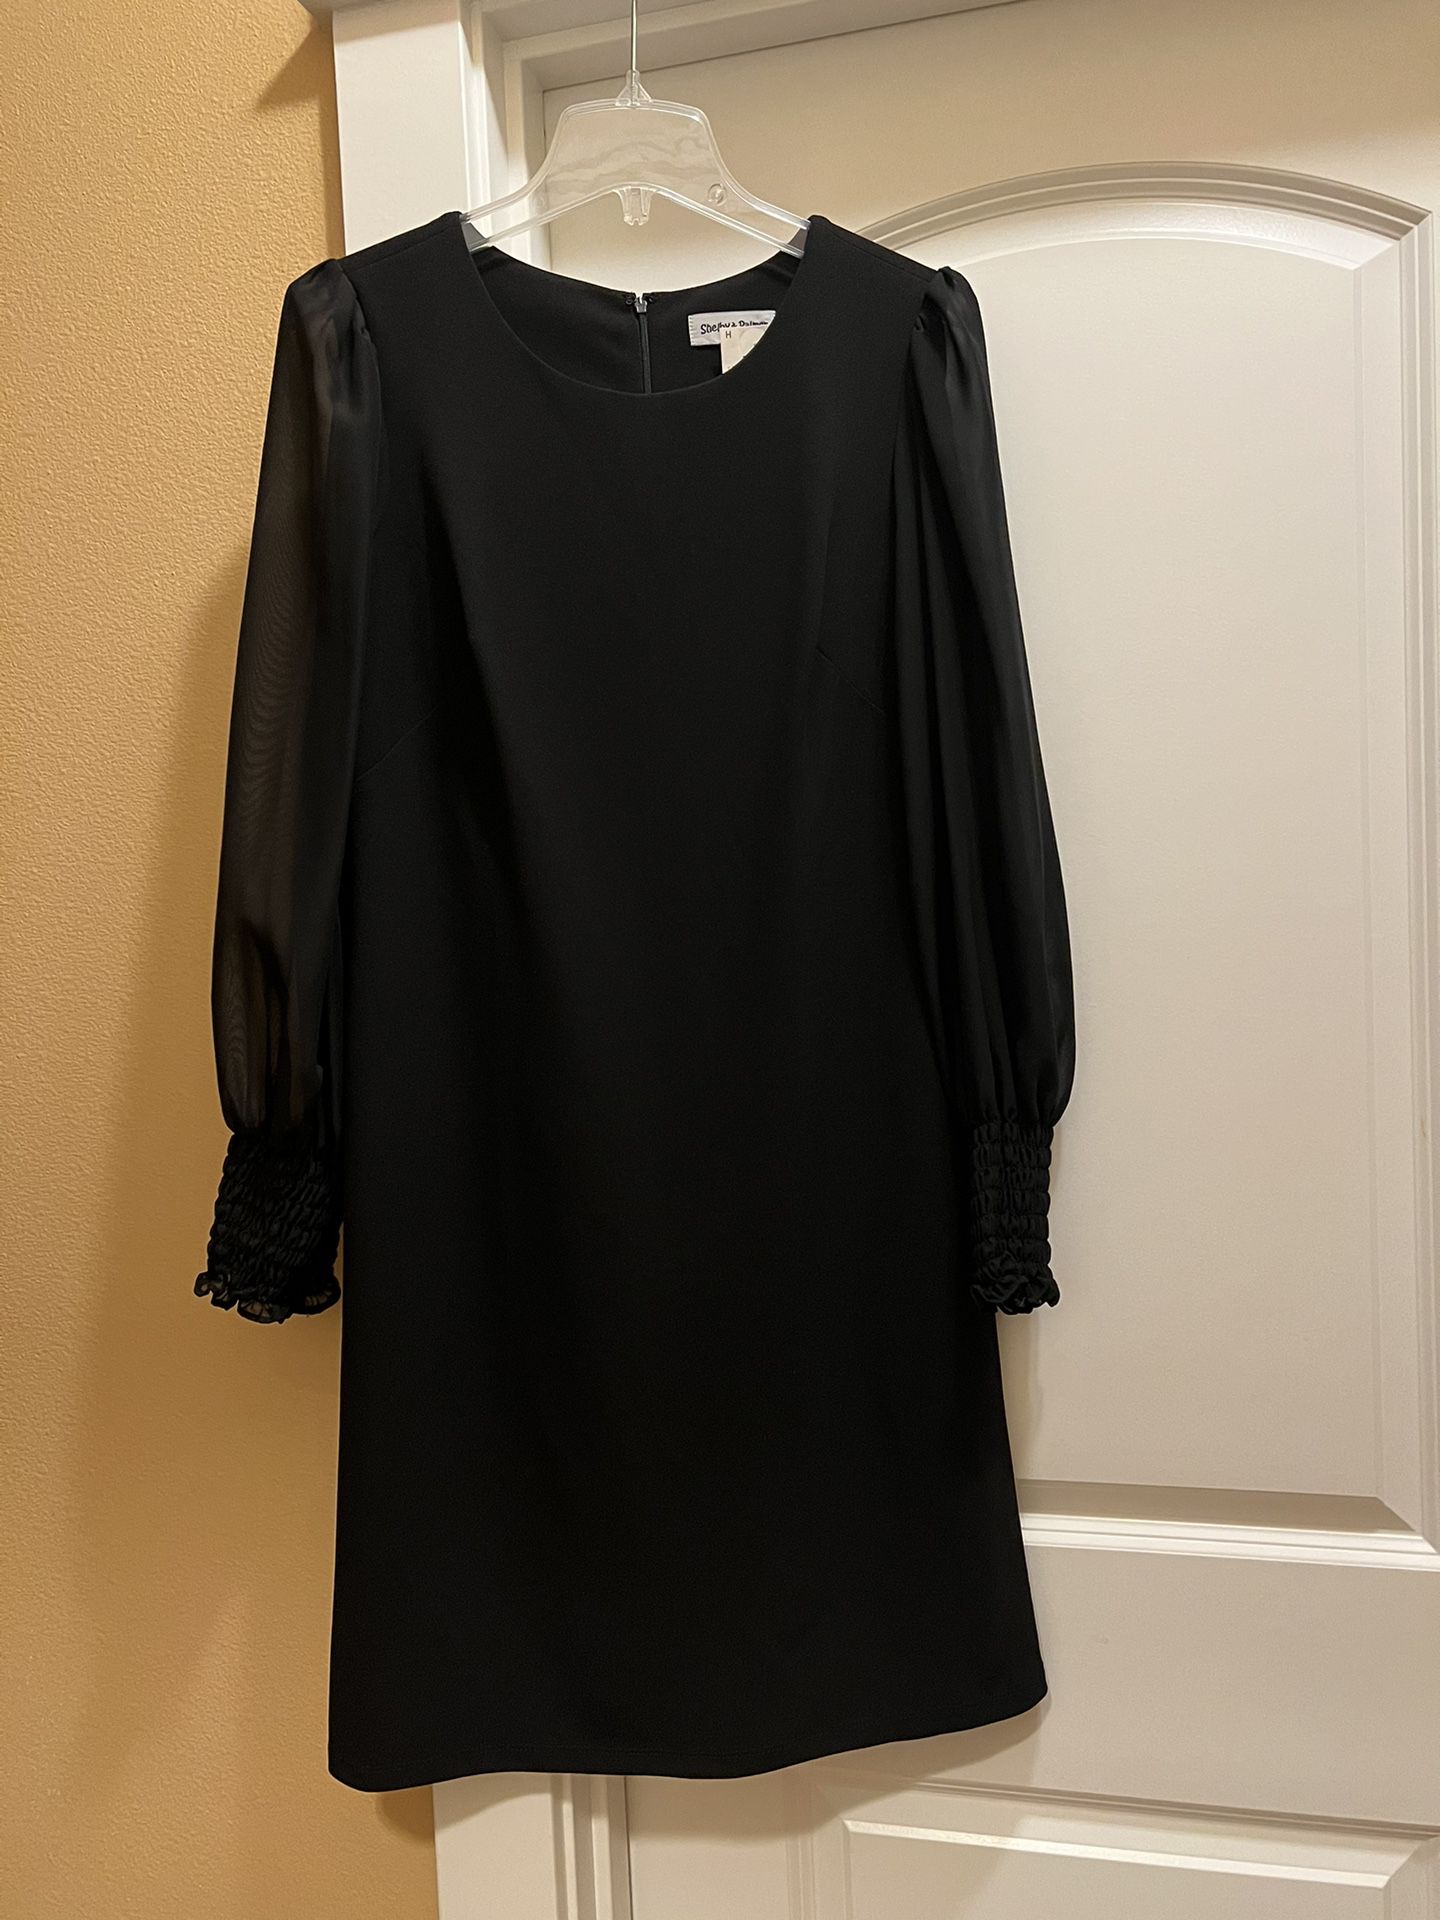 Black Dress, Size-10,$15